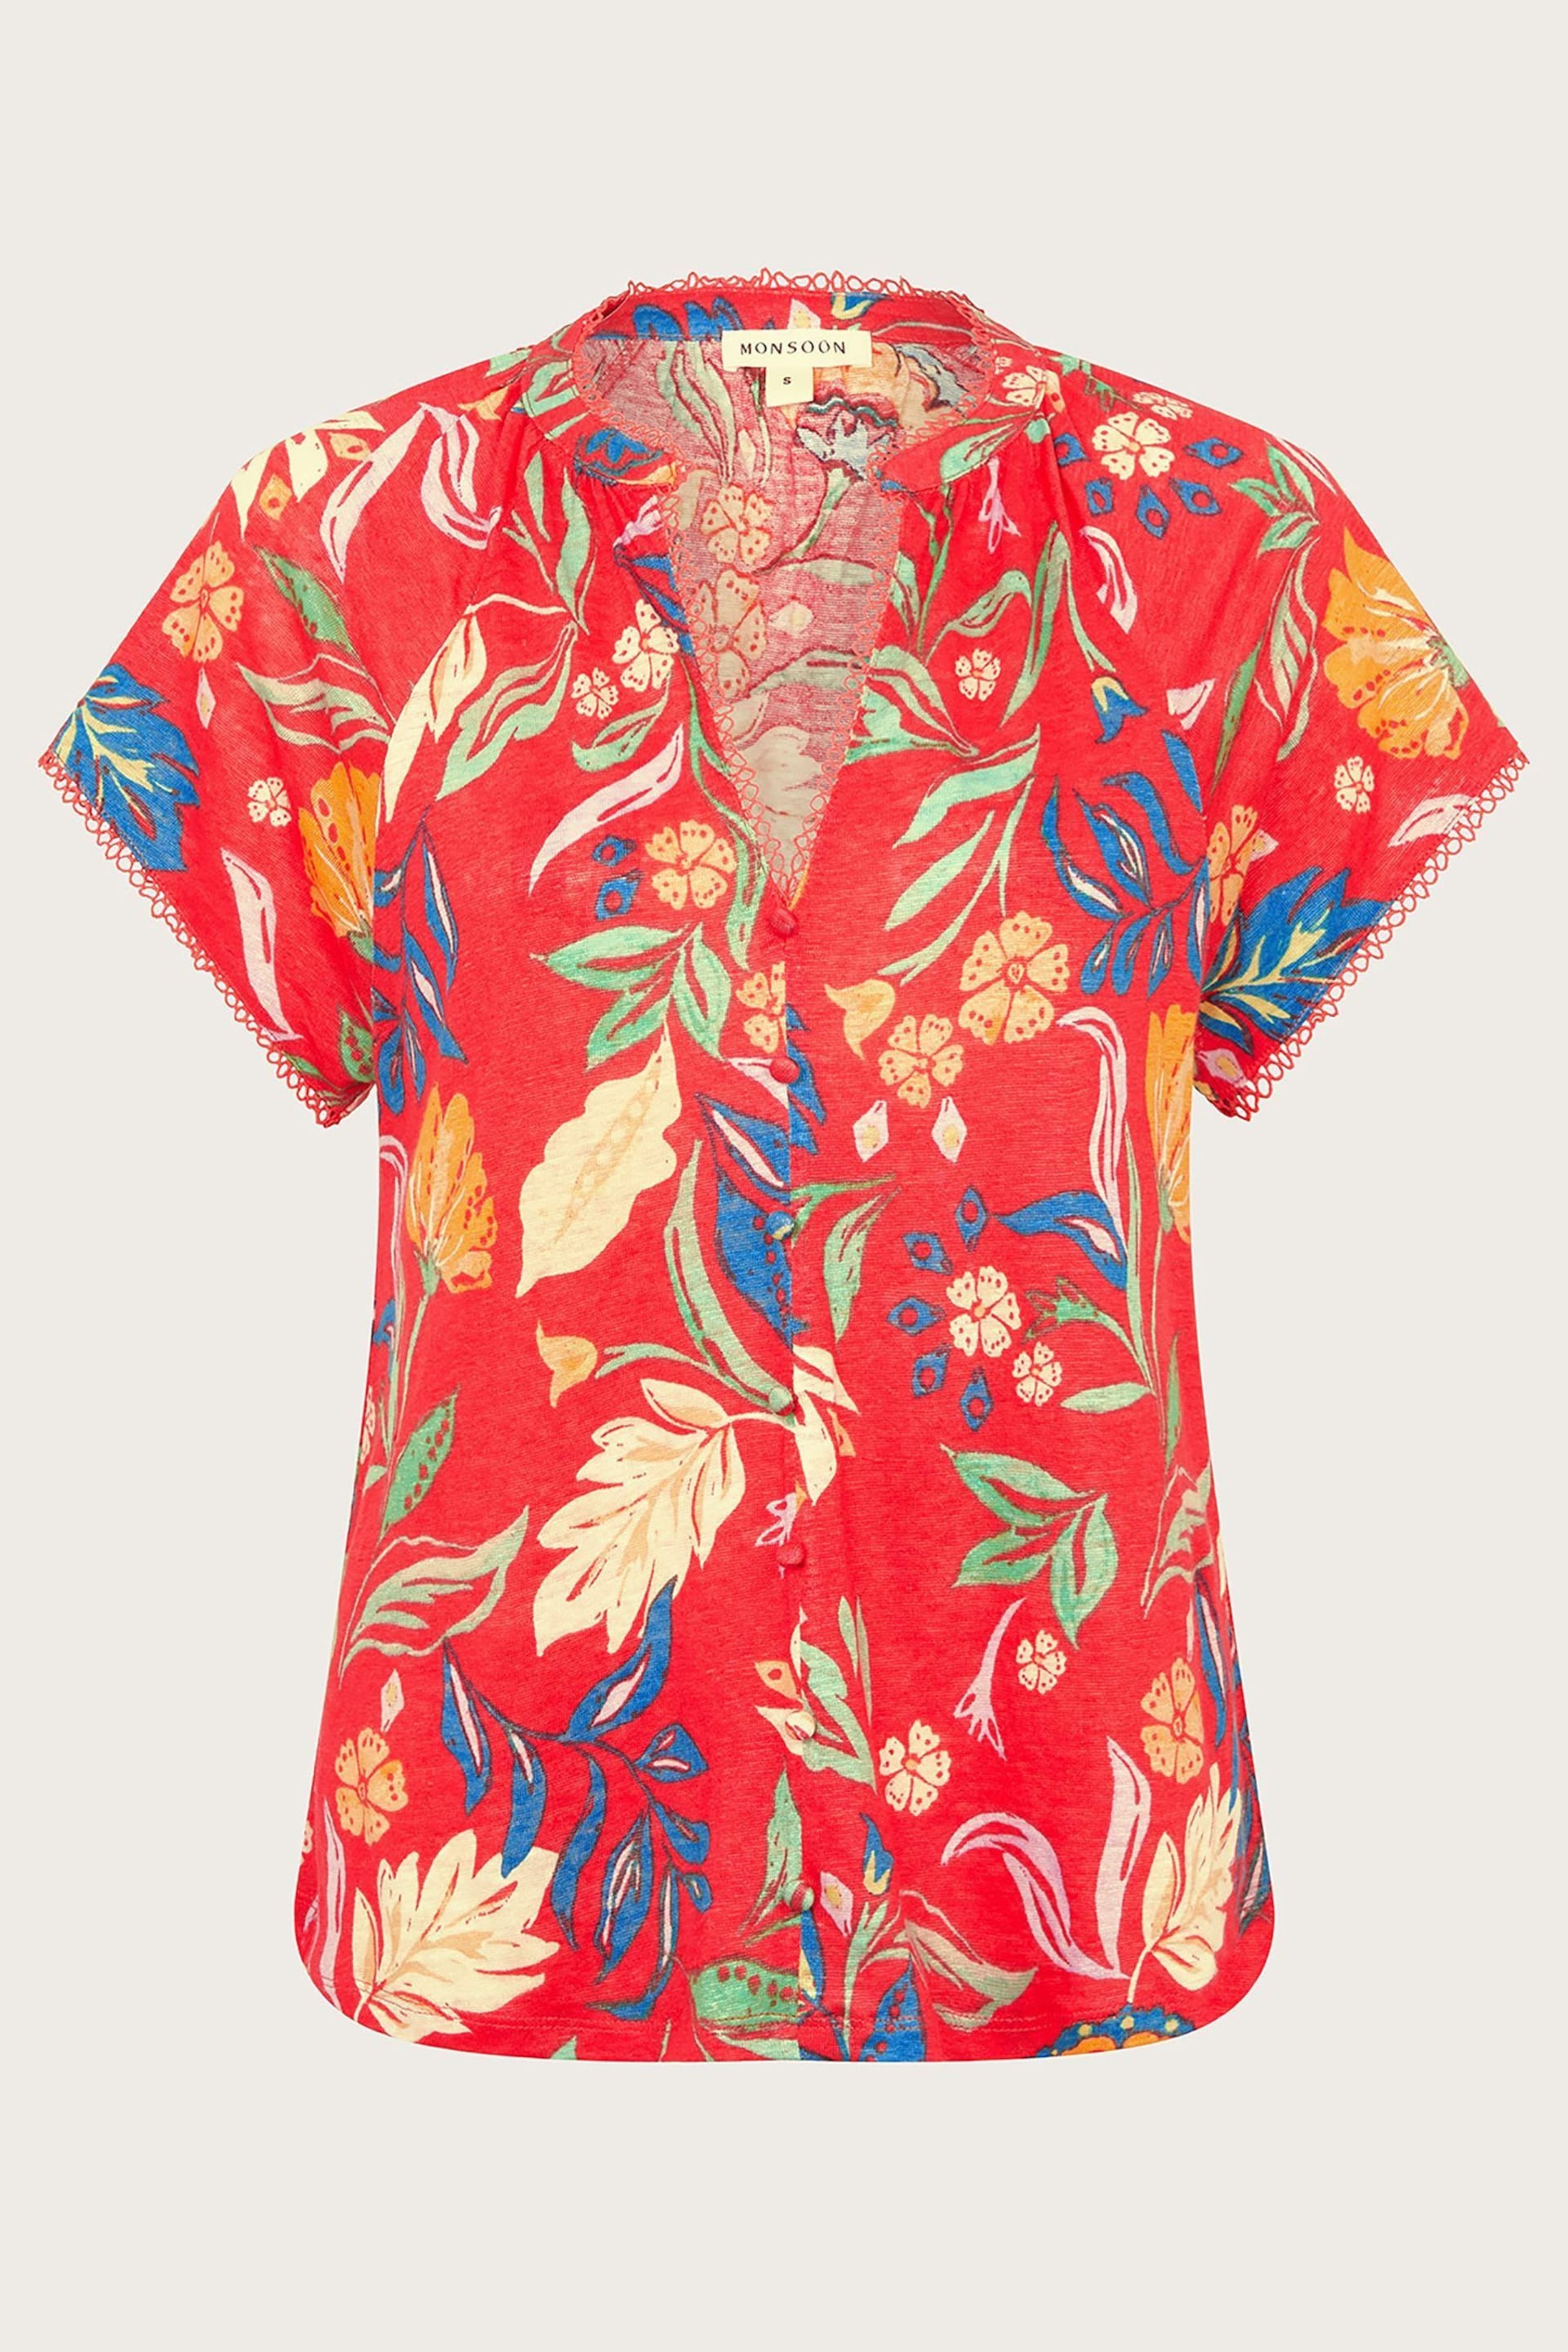 Monsoon Red Alma Print Linen T-Shirt - Image 5 of 5